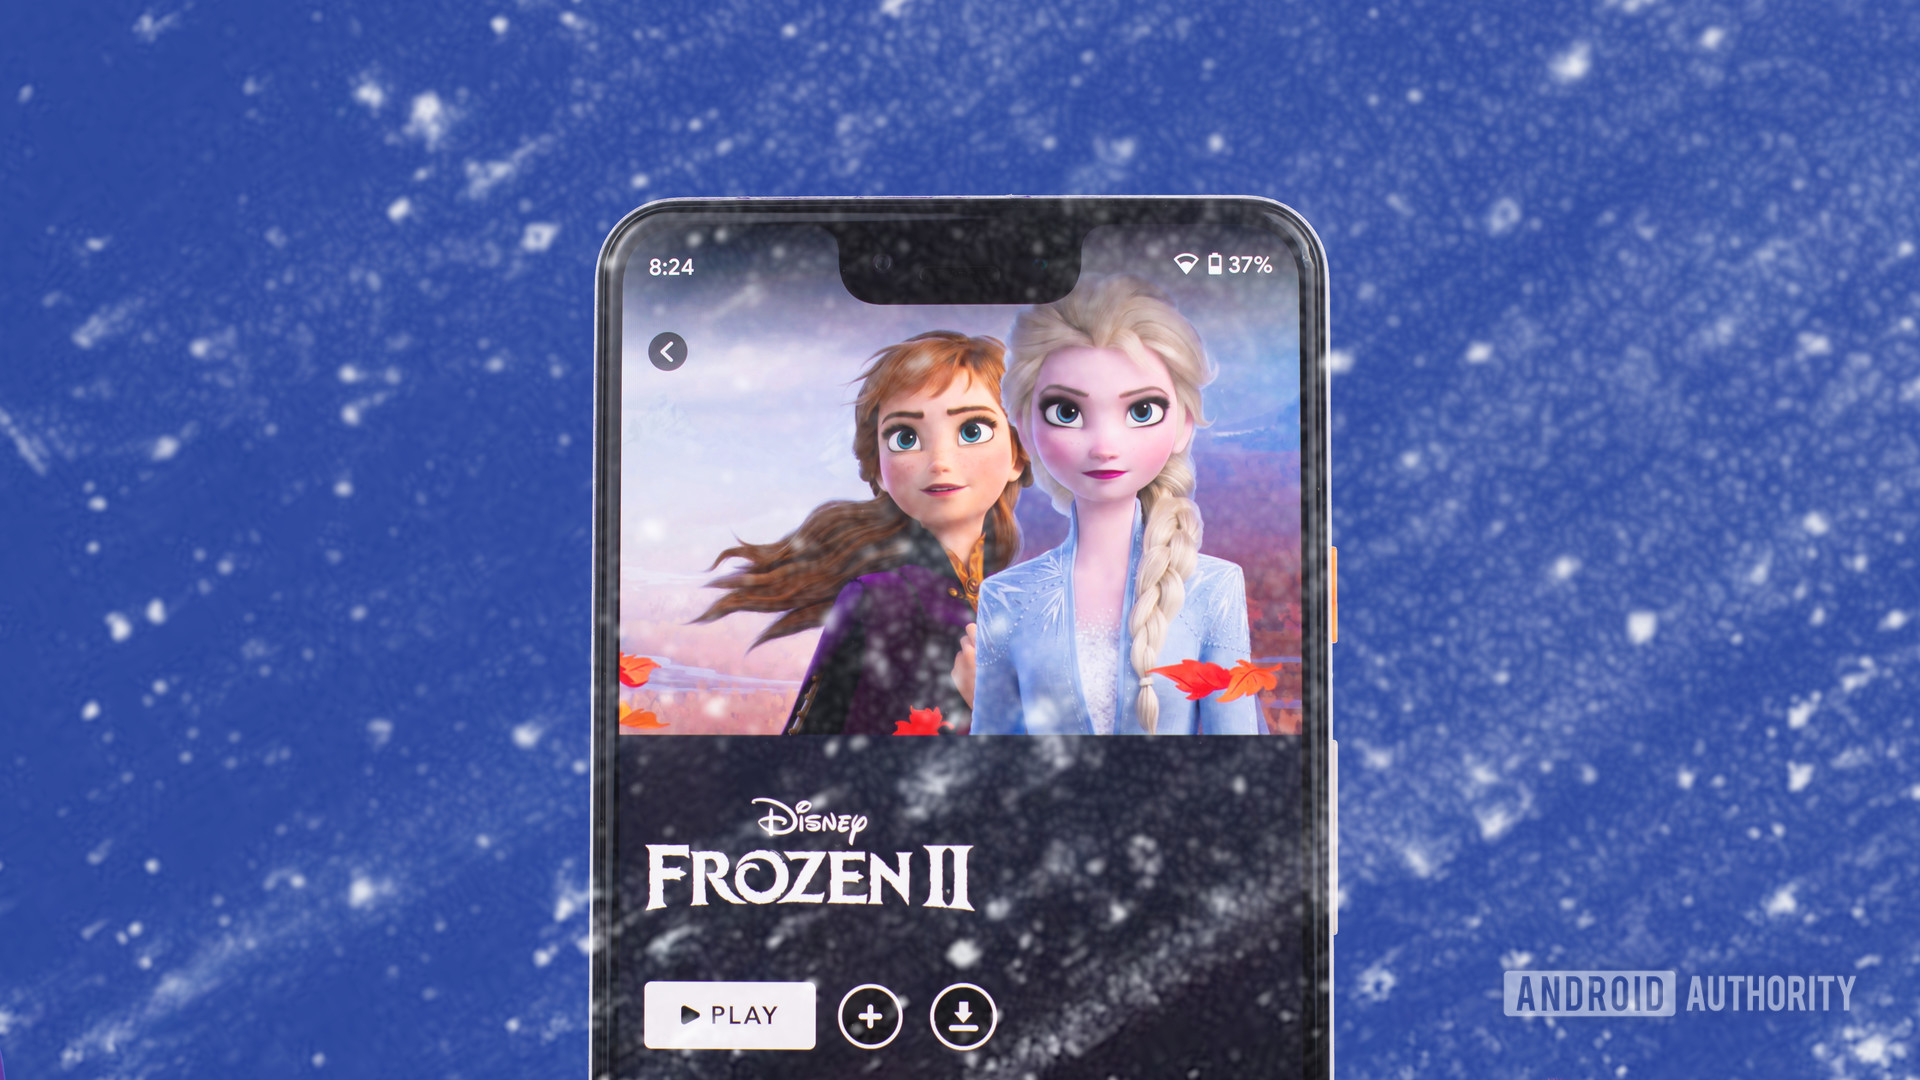 Frozen 2 on Disney Plus app with blue background 2